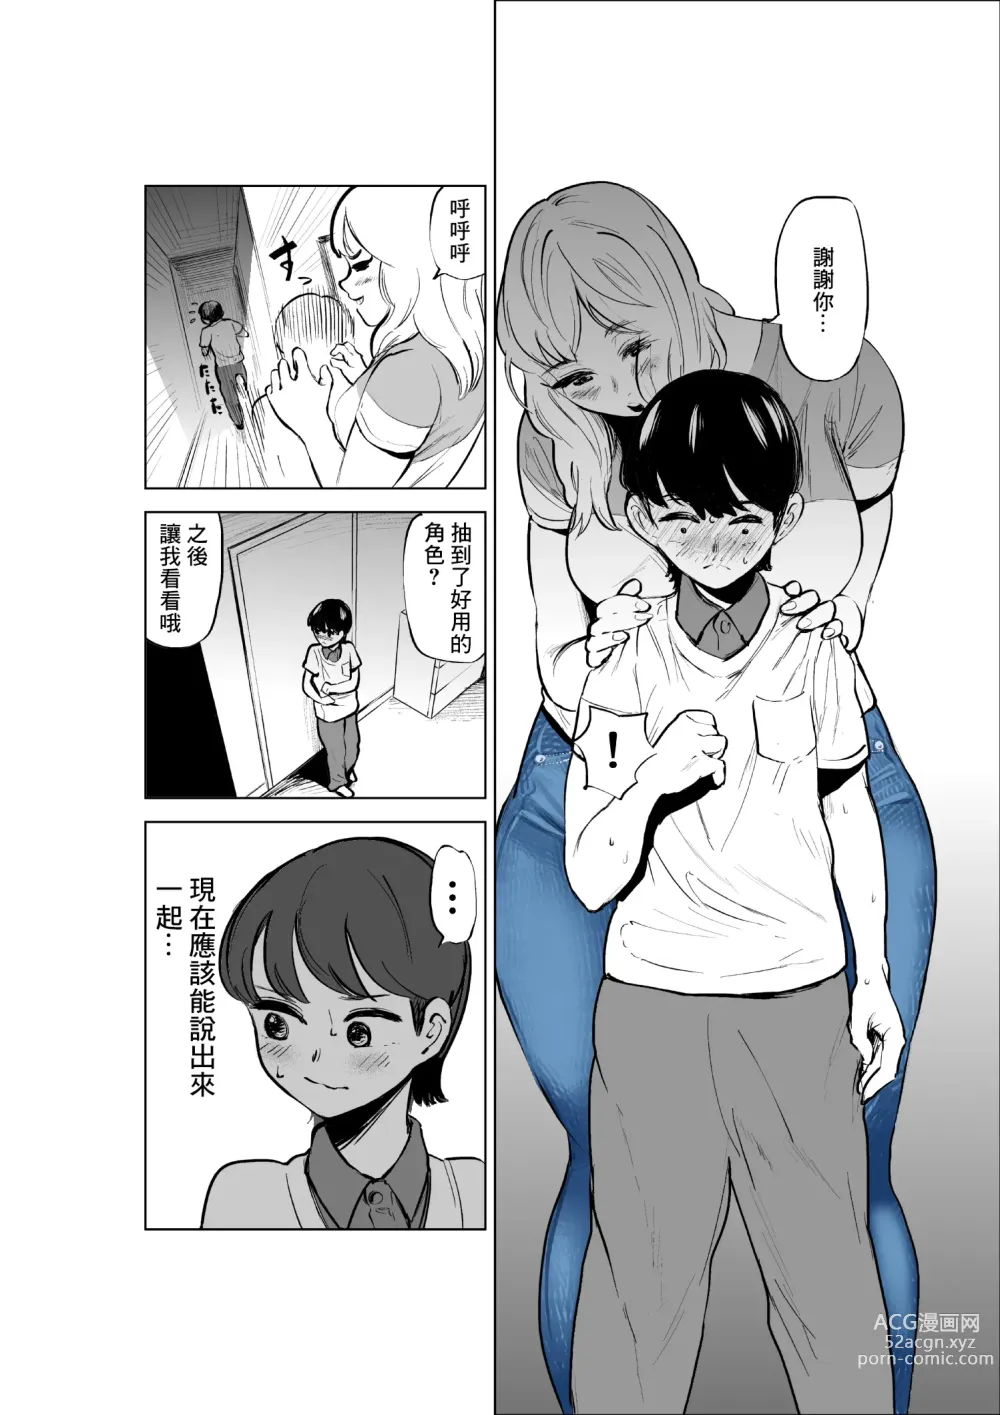 Page 6 of doujinshi Onee-chan to Kyori o Chijimeru Hanashi